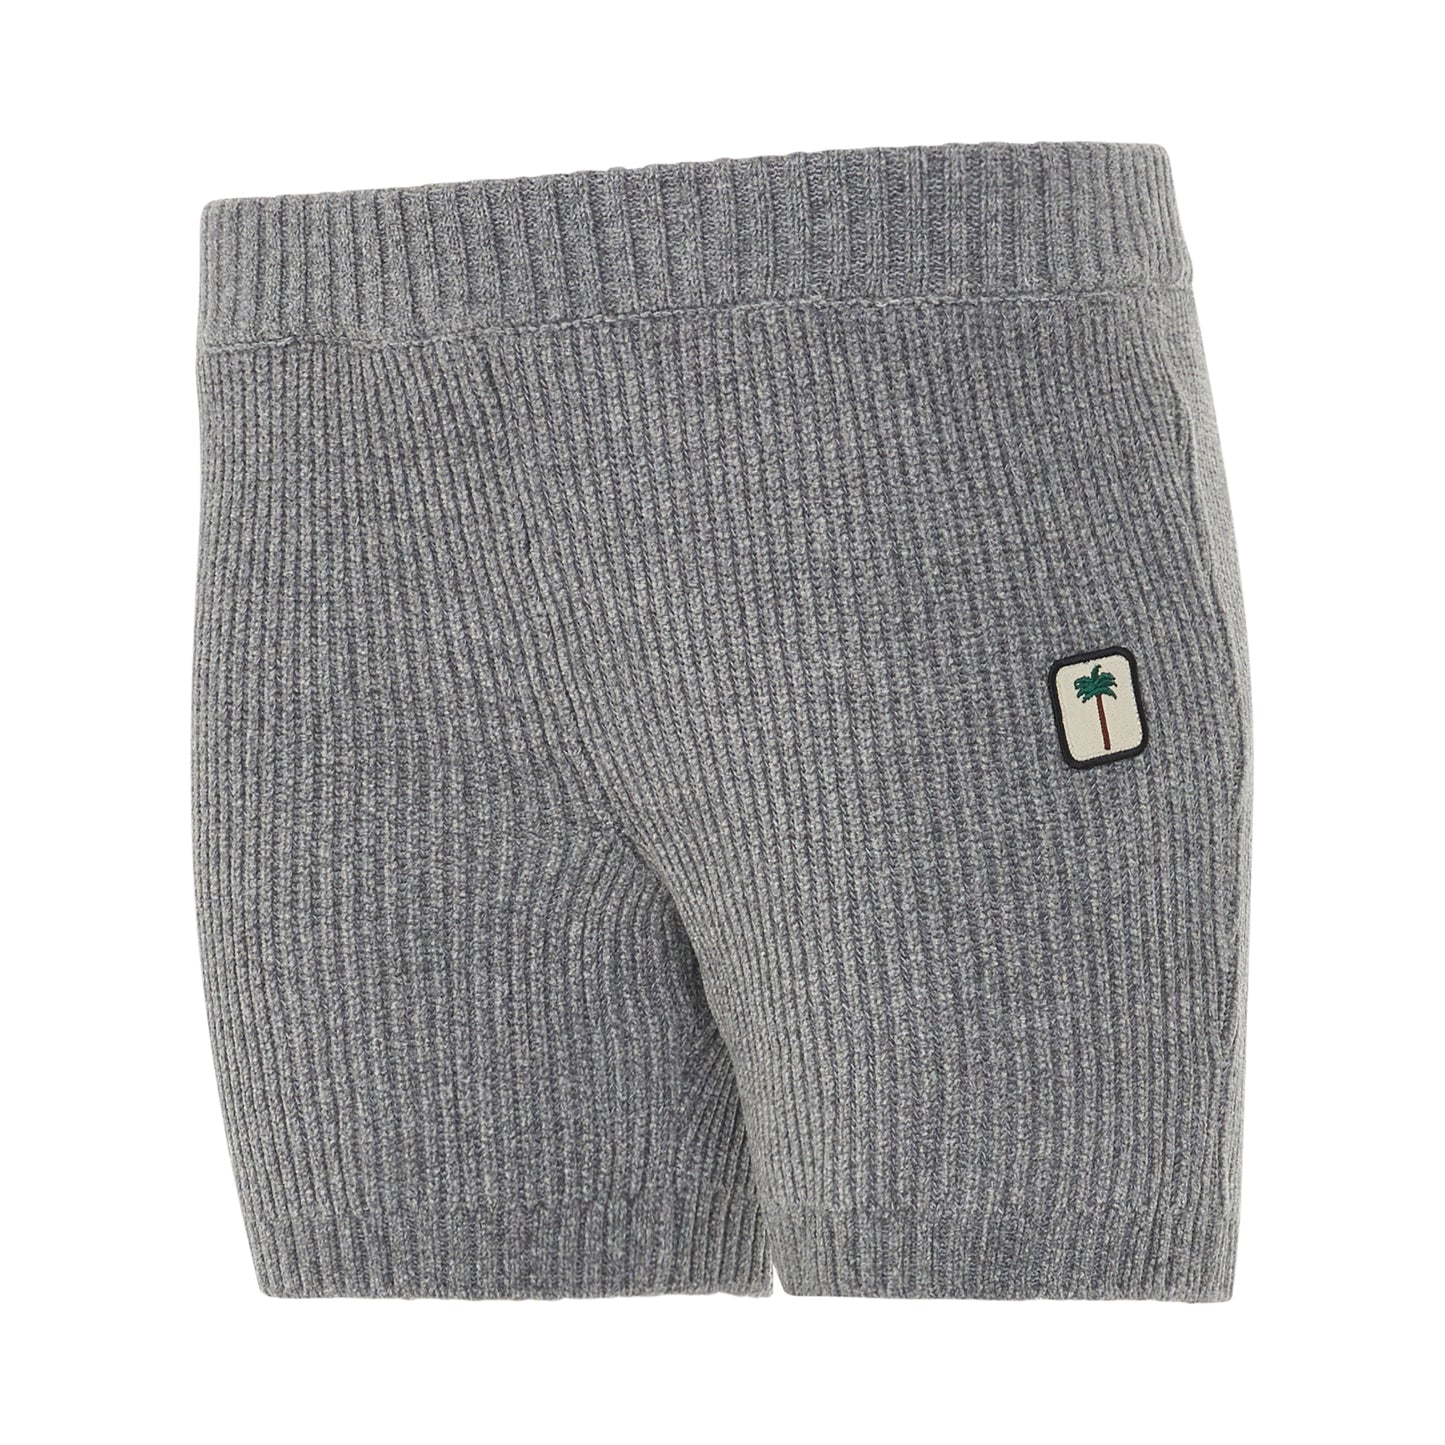 PXP Knit Shorts in Grey/Black